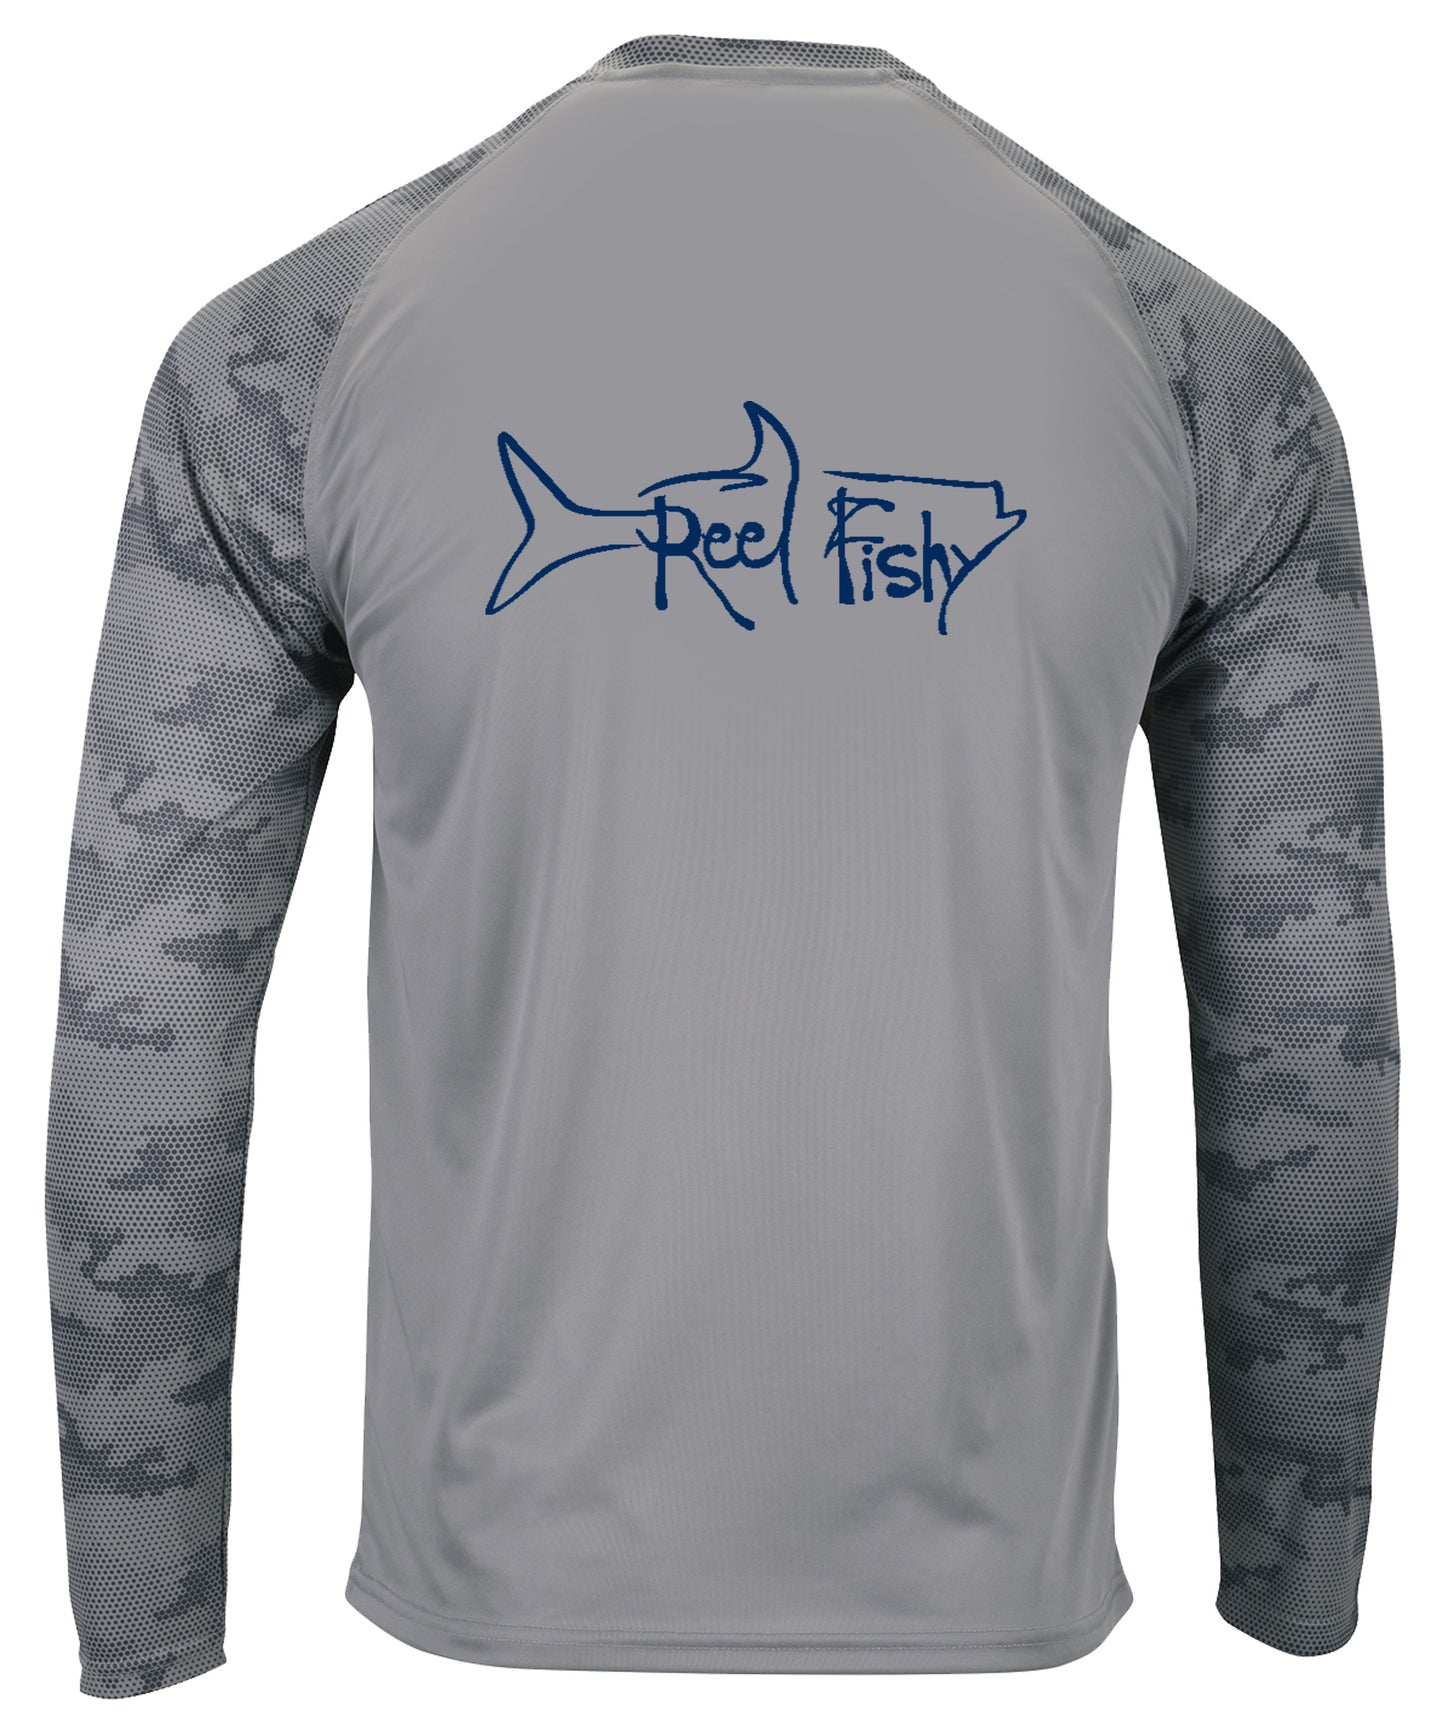 Tarpon Digital Camo Performance Dry-Fit Fishing Long Sleeve Shirts with 50+ UPF Sun Protection - Dk Gray